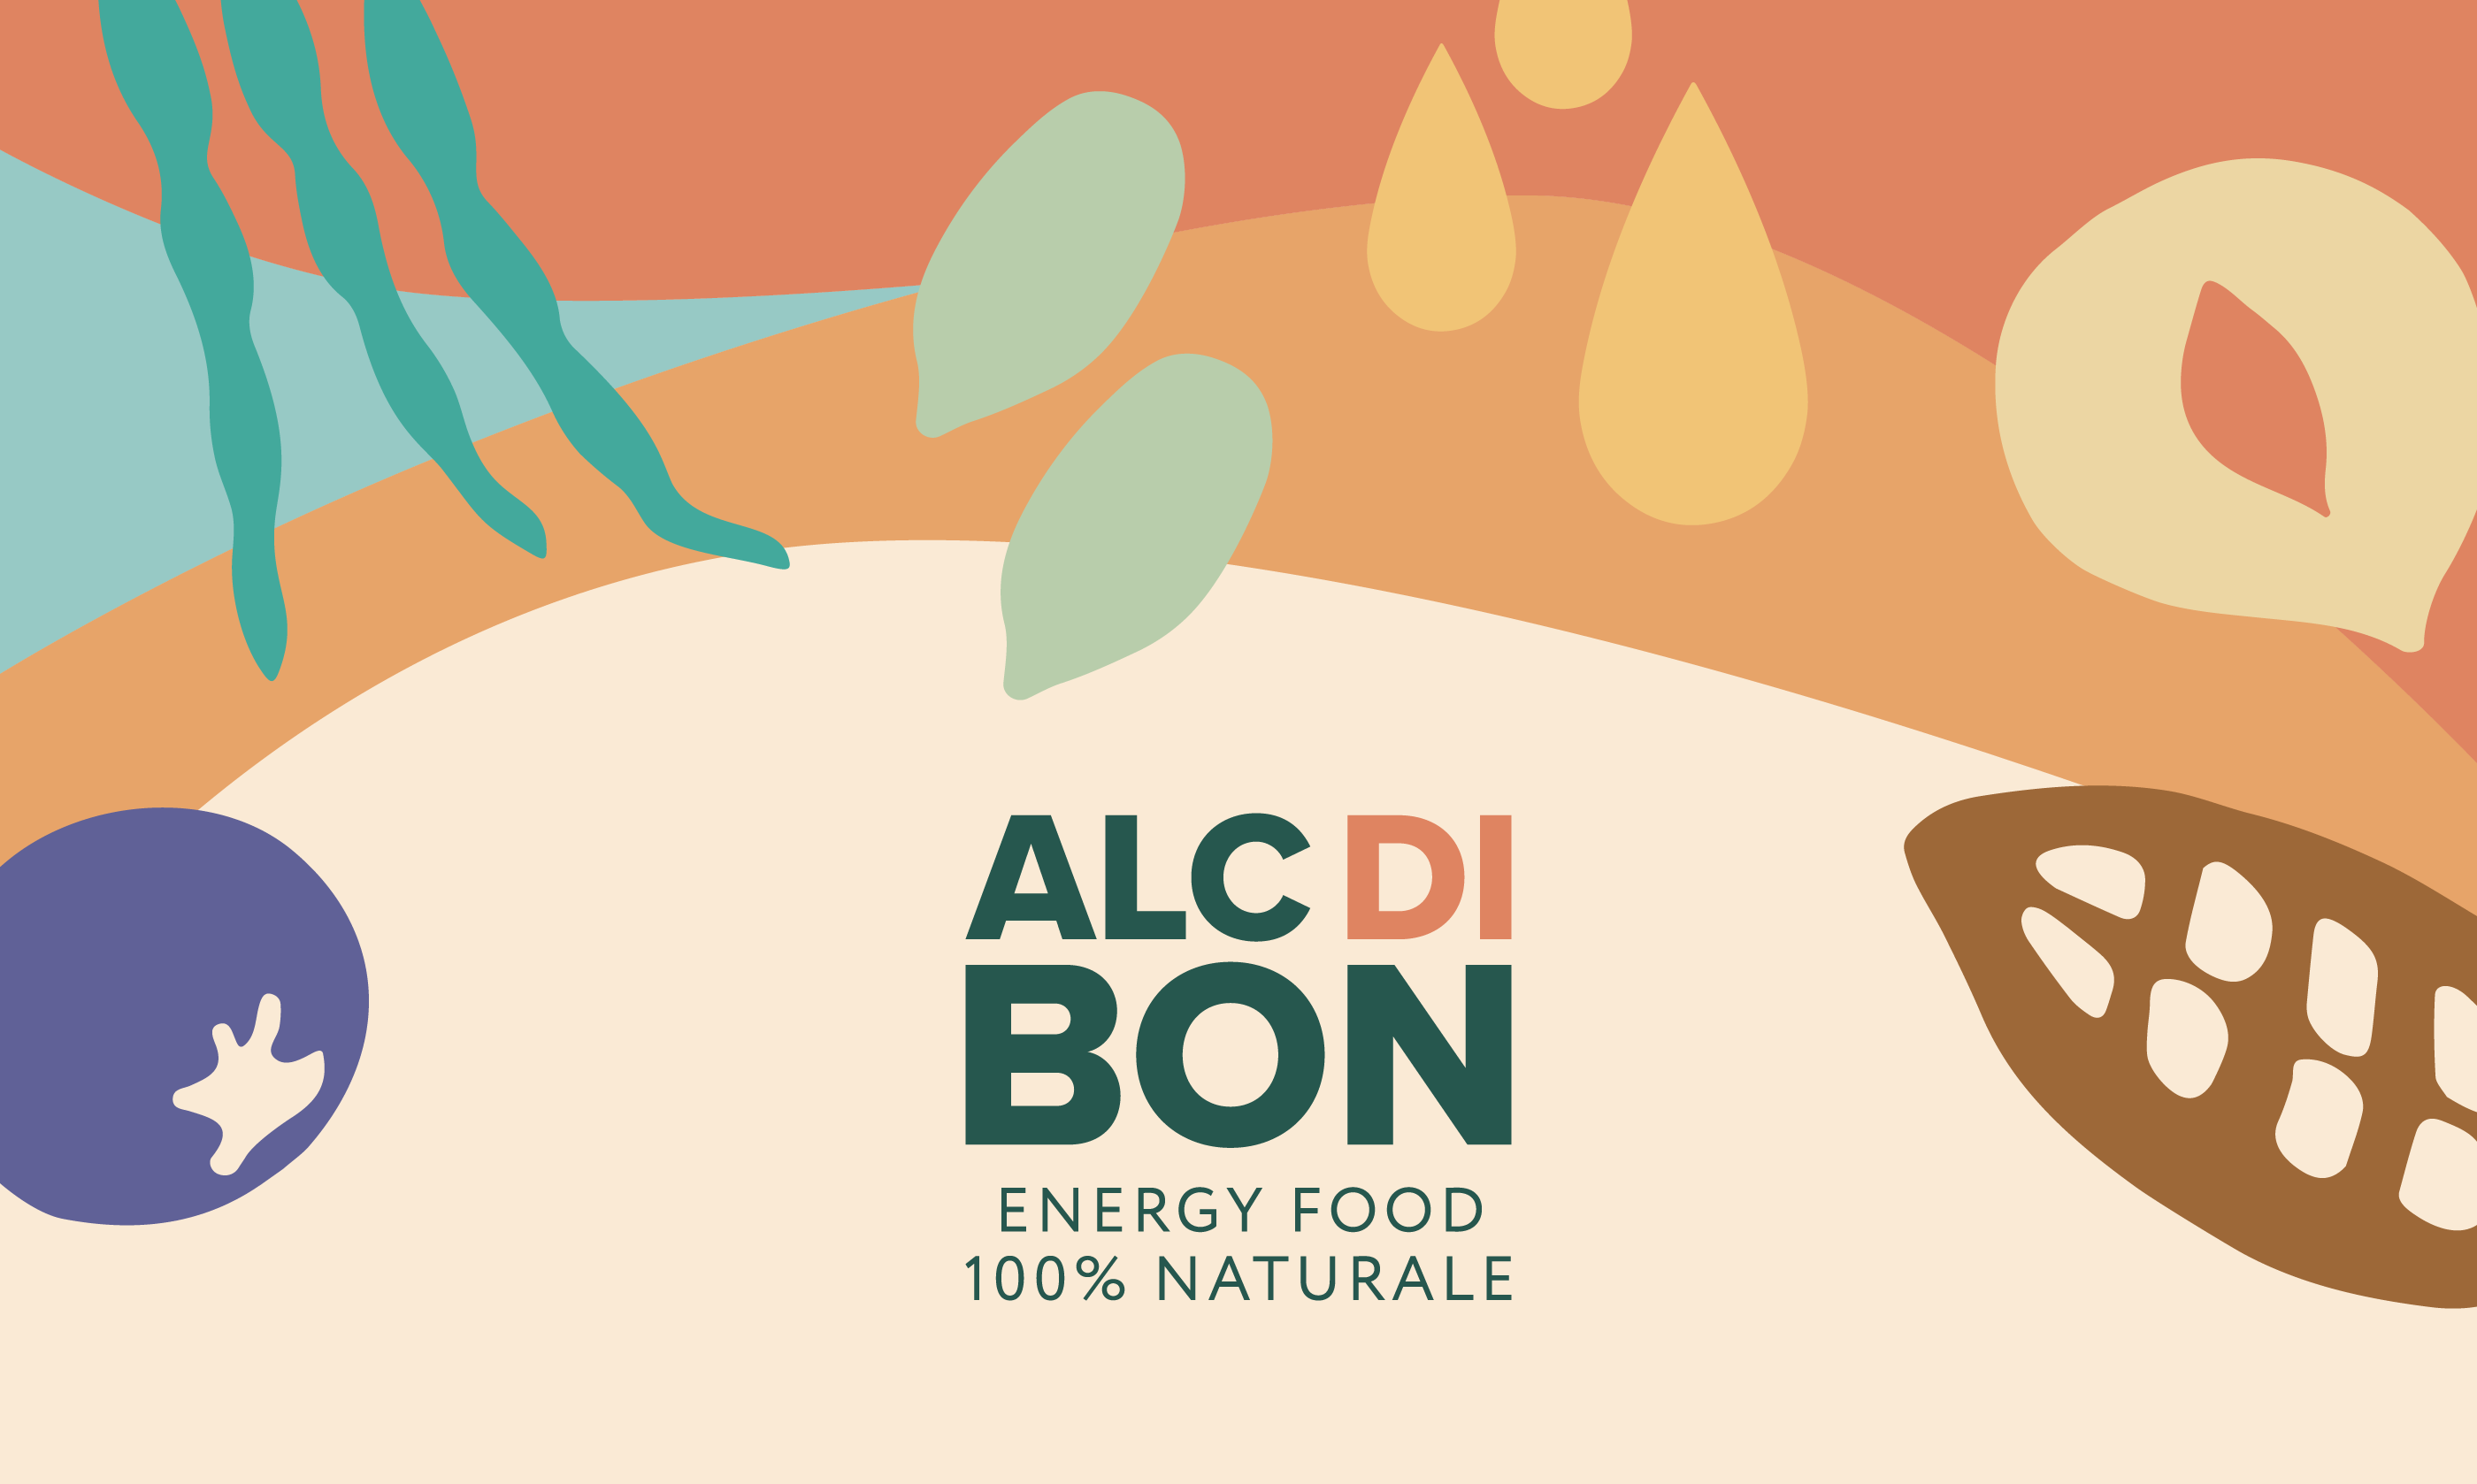 02. Energy Food - Alc di Bon